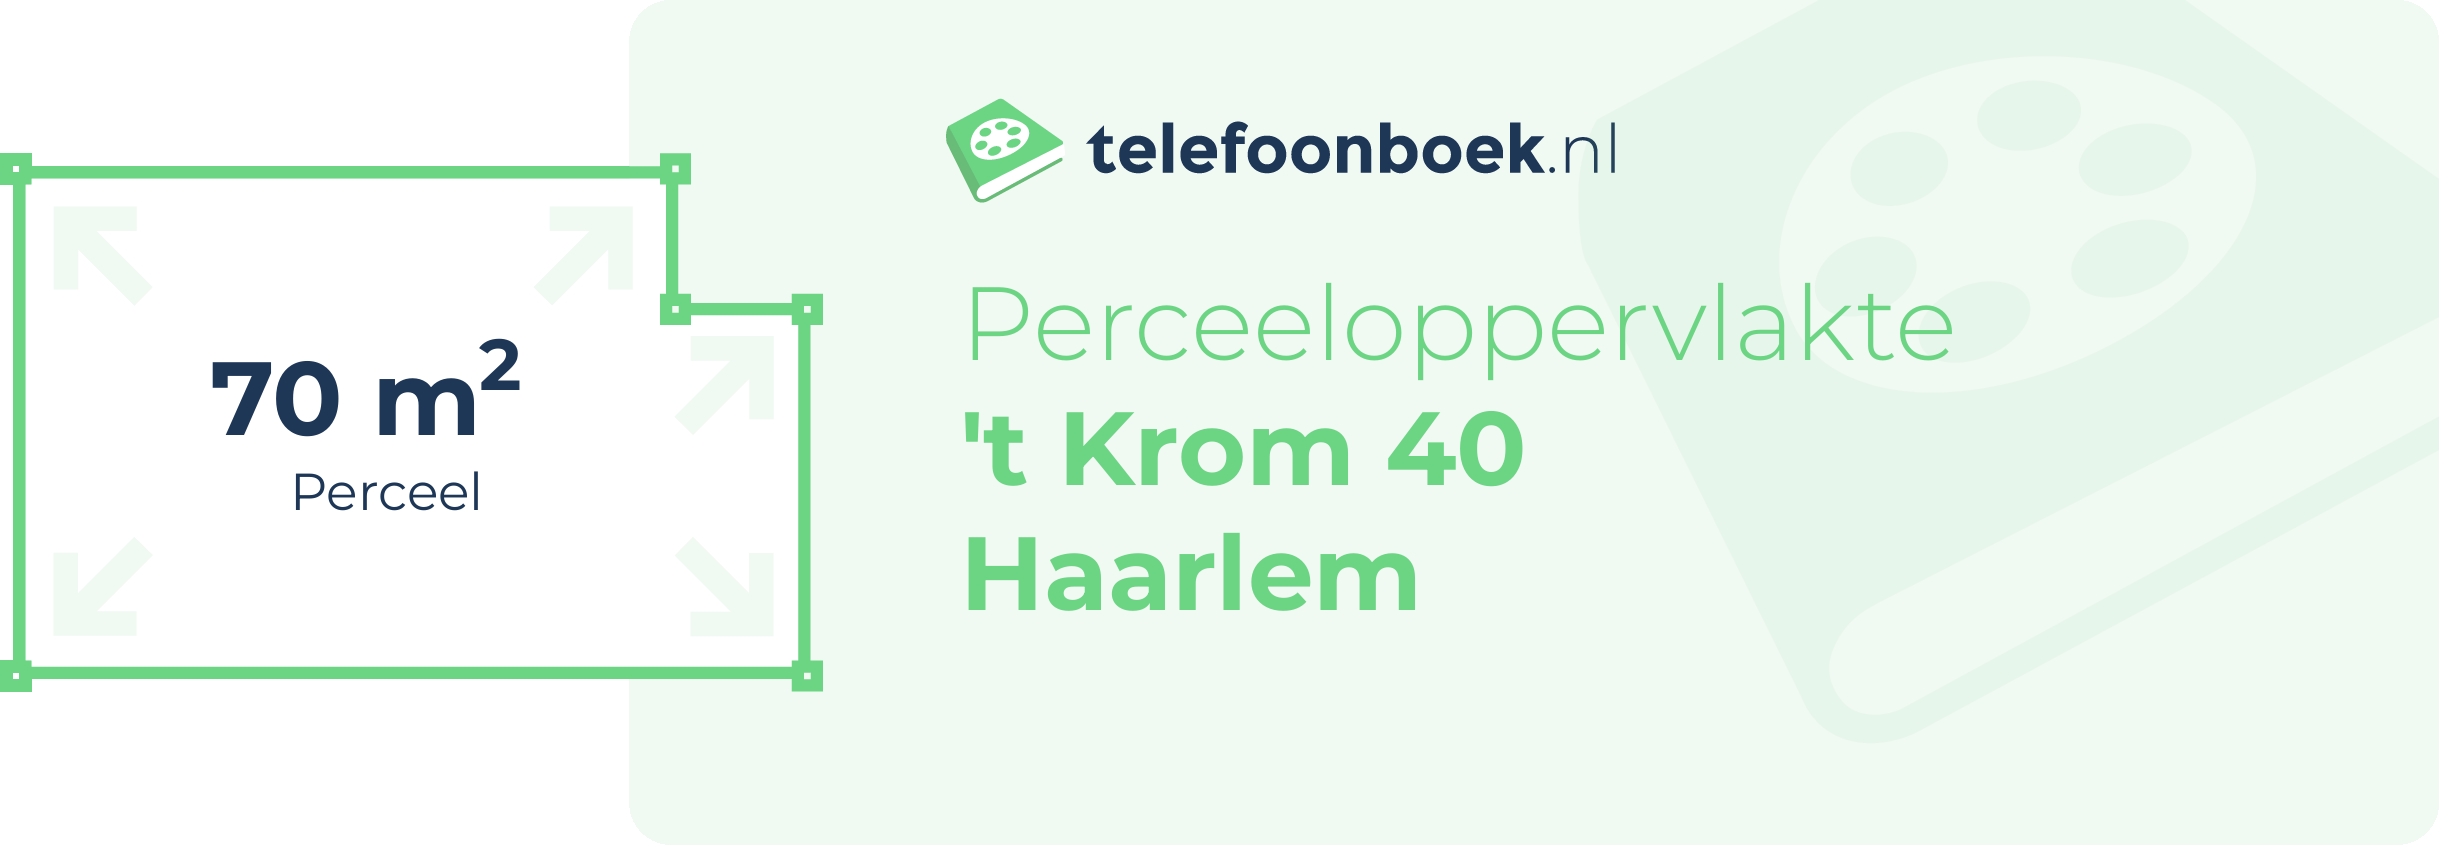 Perceeloppervlakte 't Krom 40 Haarlem